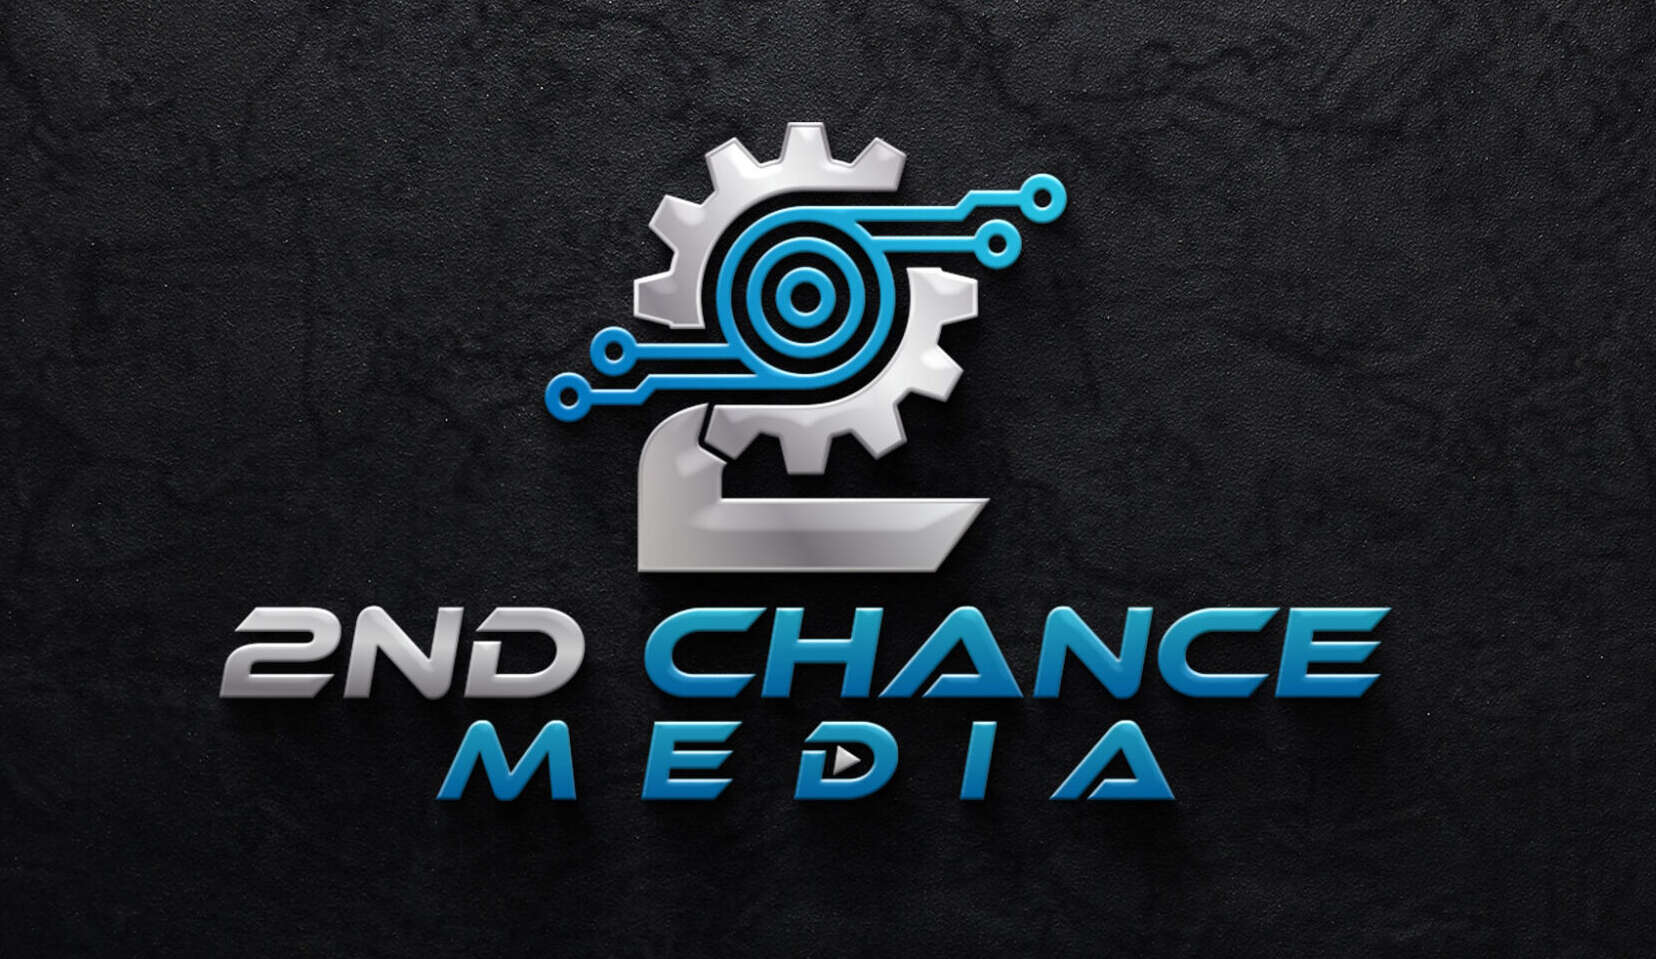 2nd Chance Media